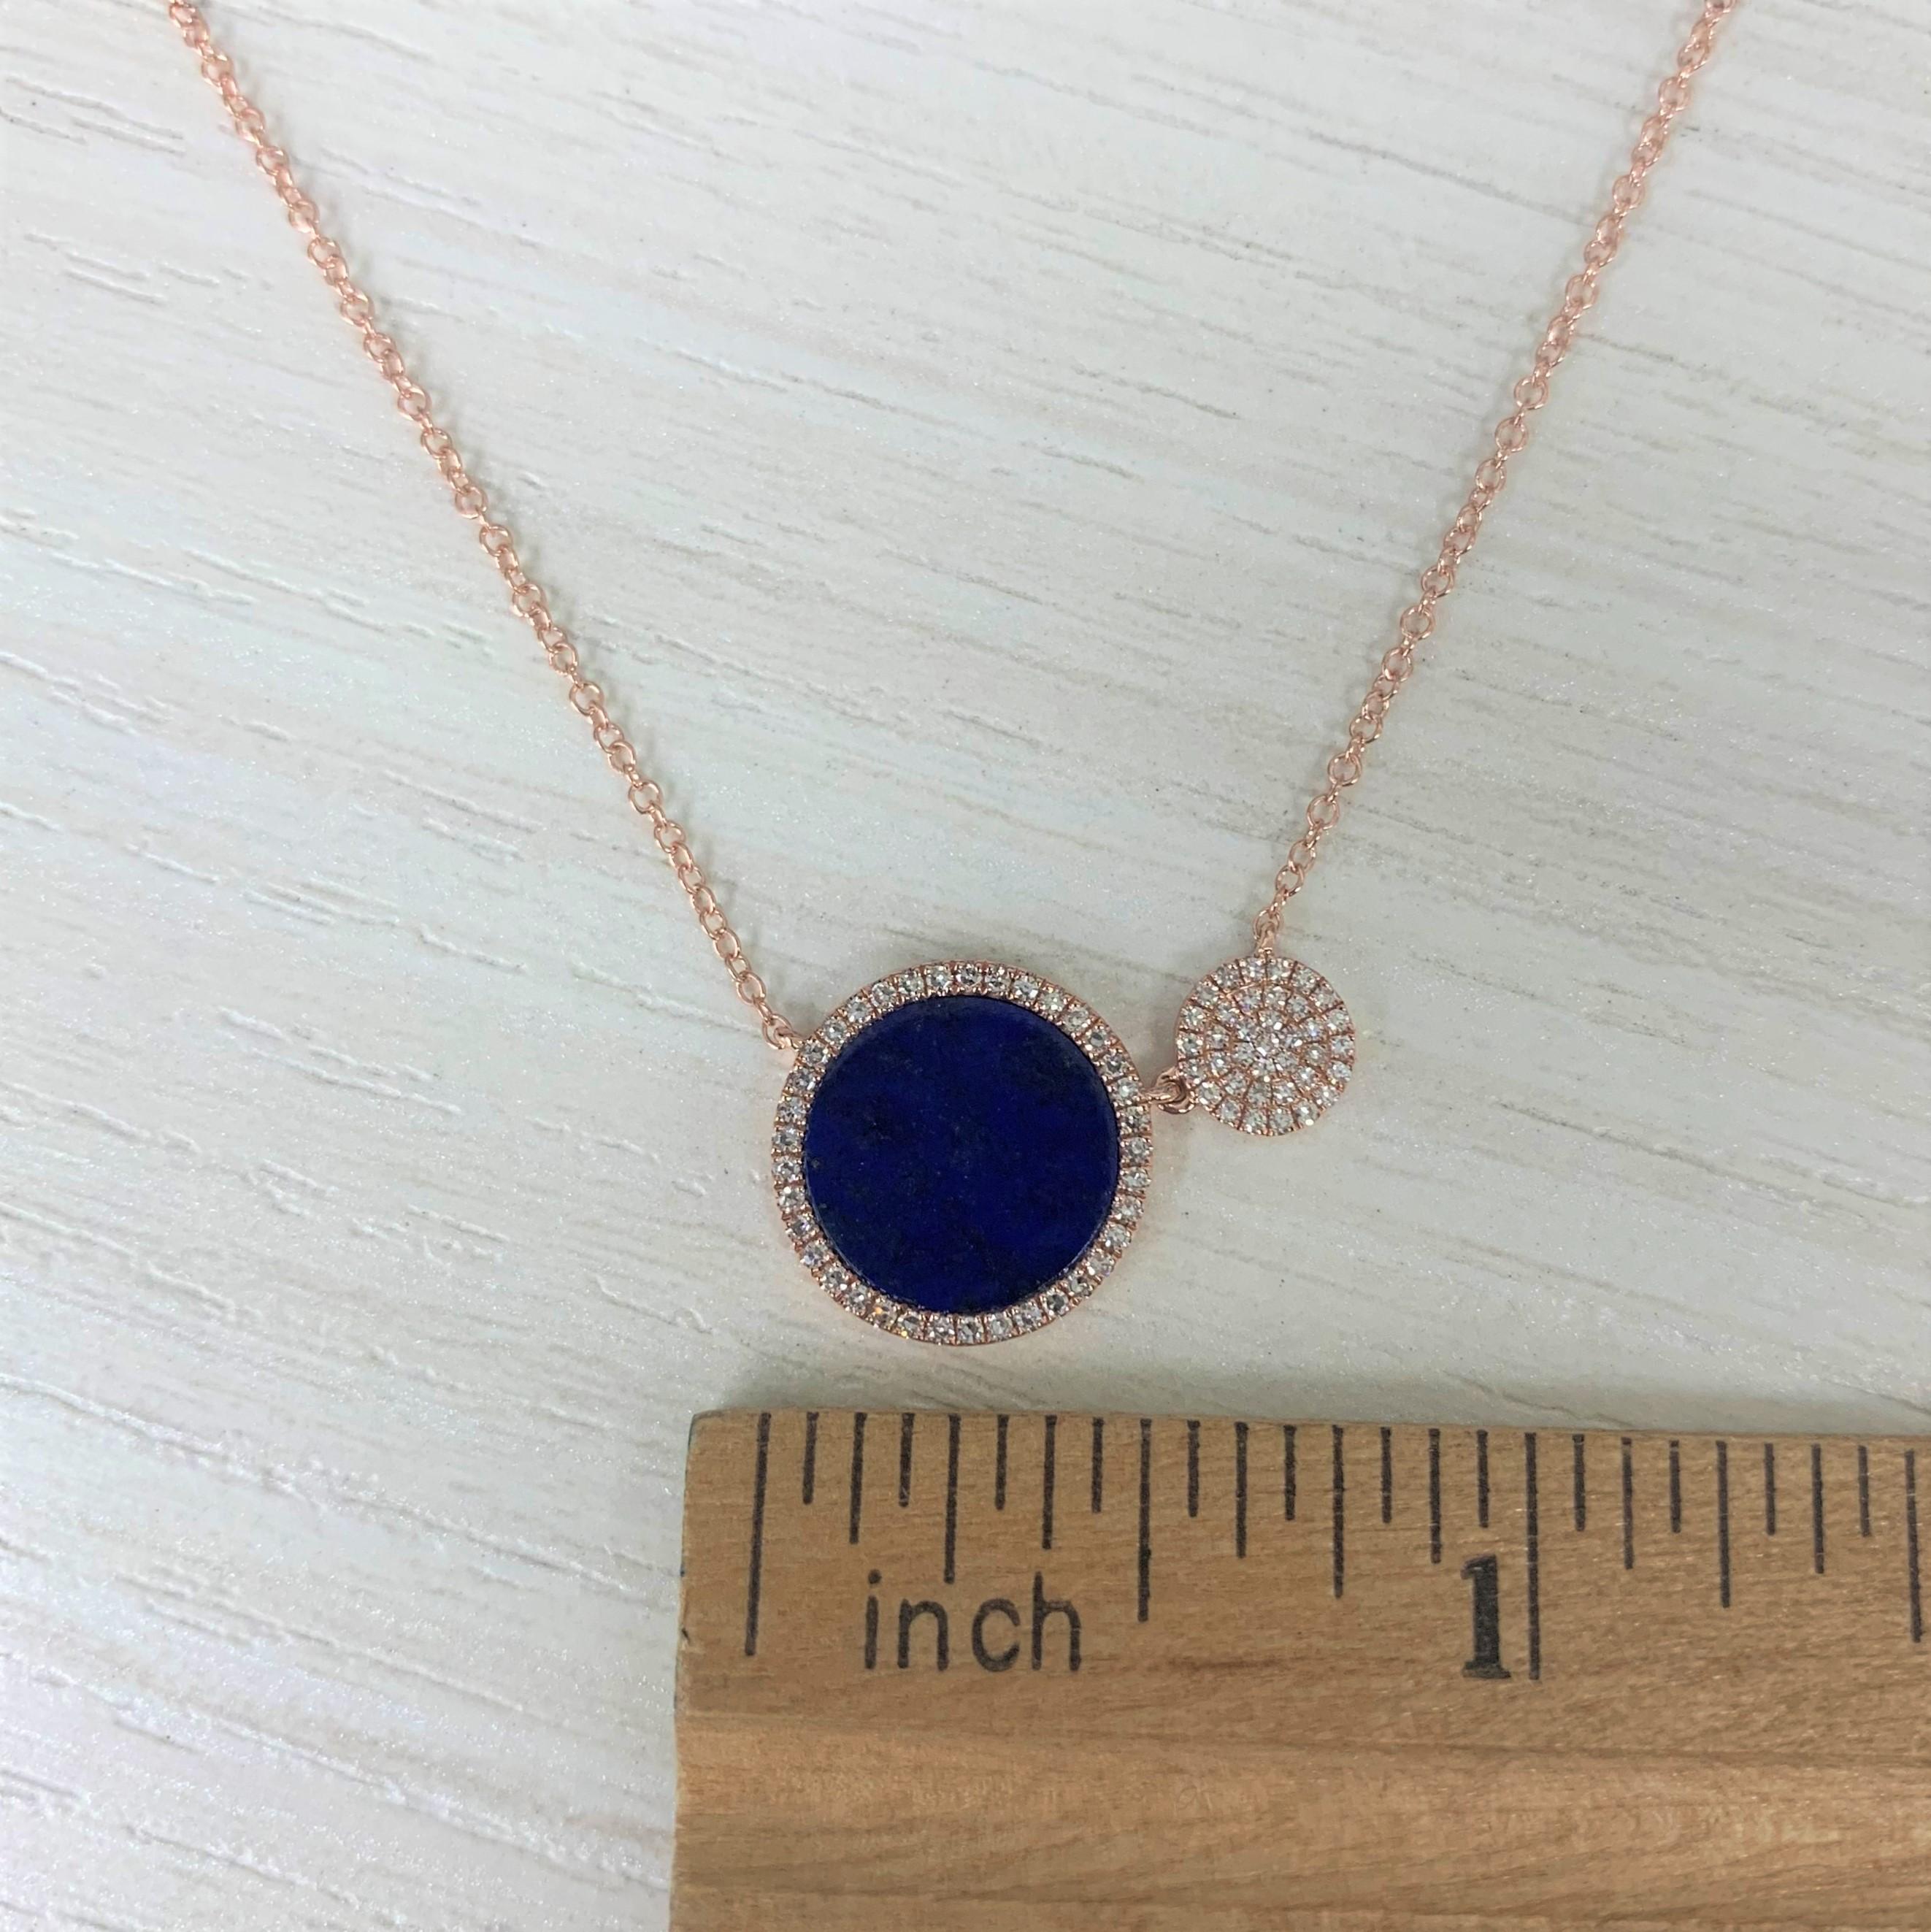 Women's 14 Karat Rose Gold 0.22 Carat Diamond & Lapis Pendant Necklace For Sale